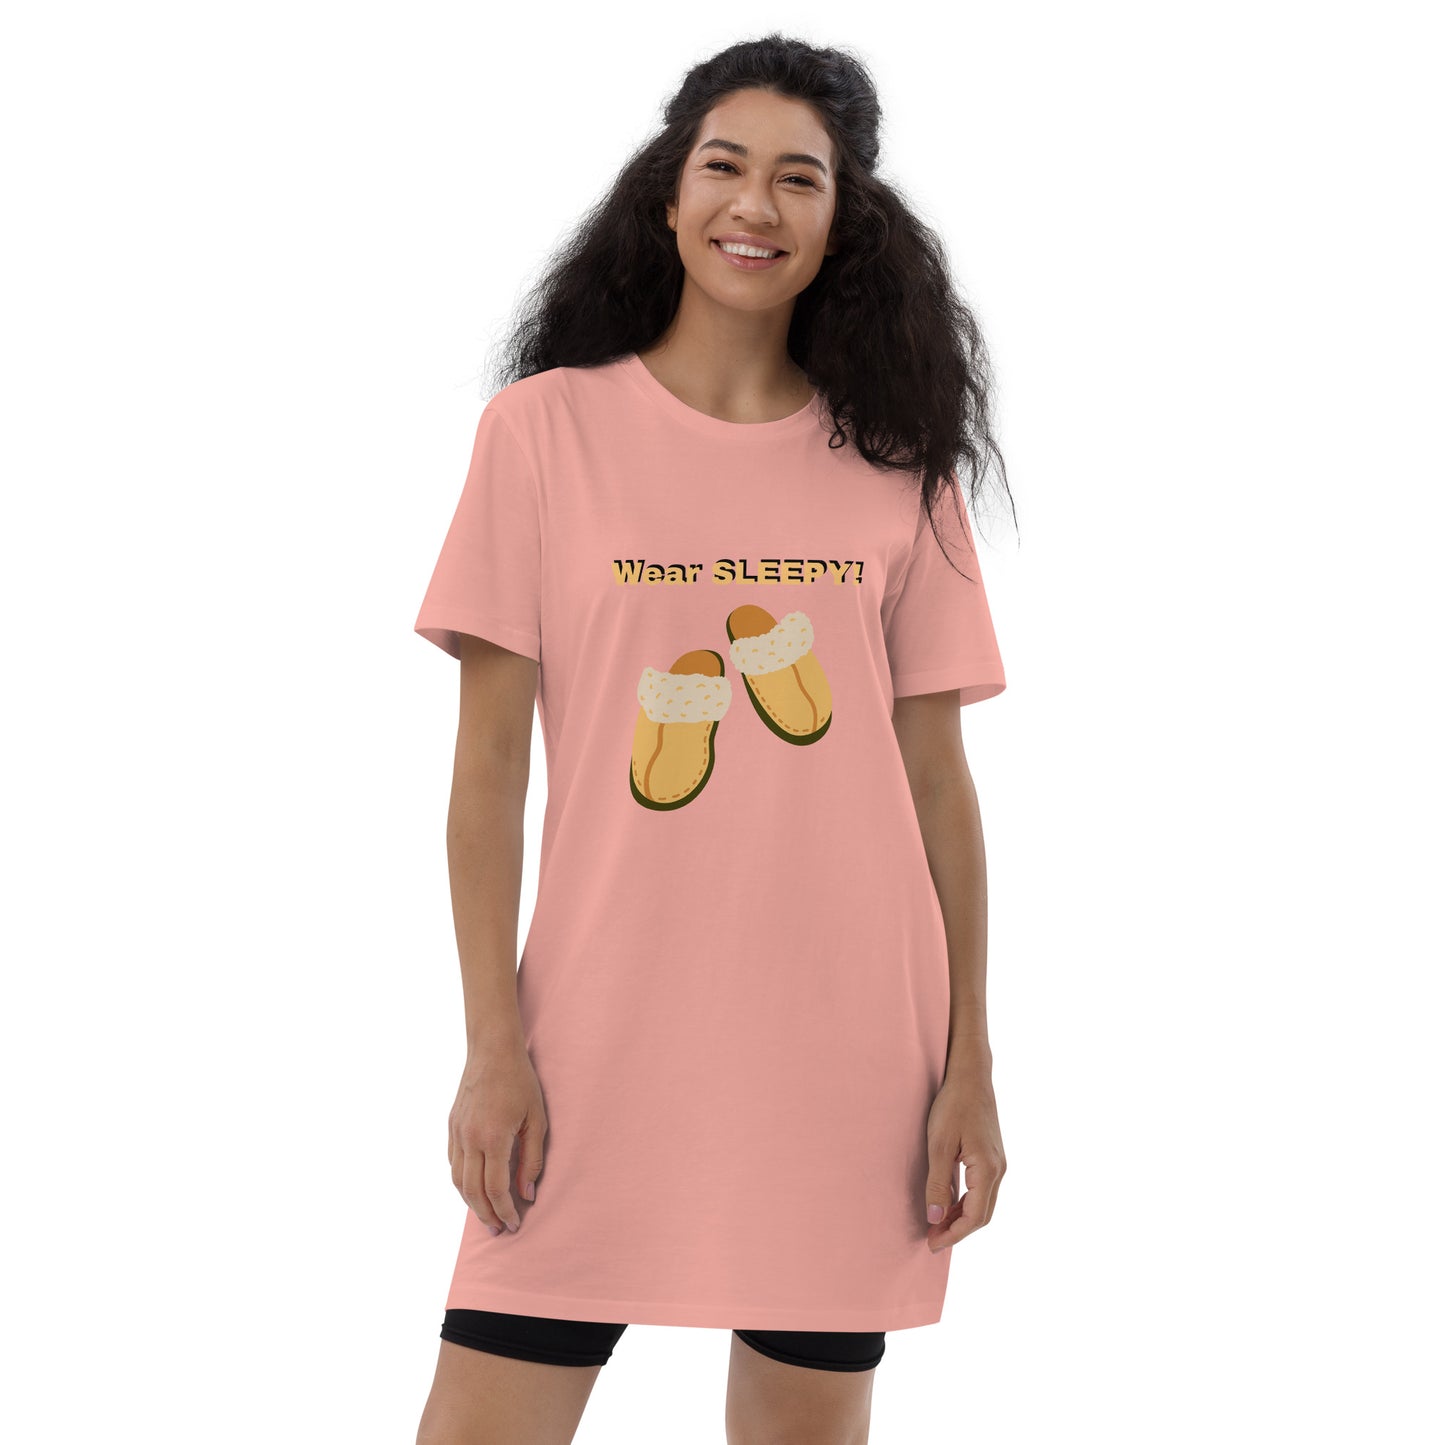 Slip into Sleep Tee - T-shirt dress